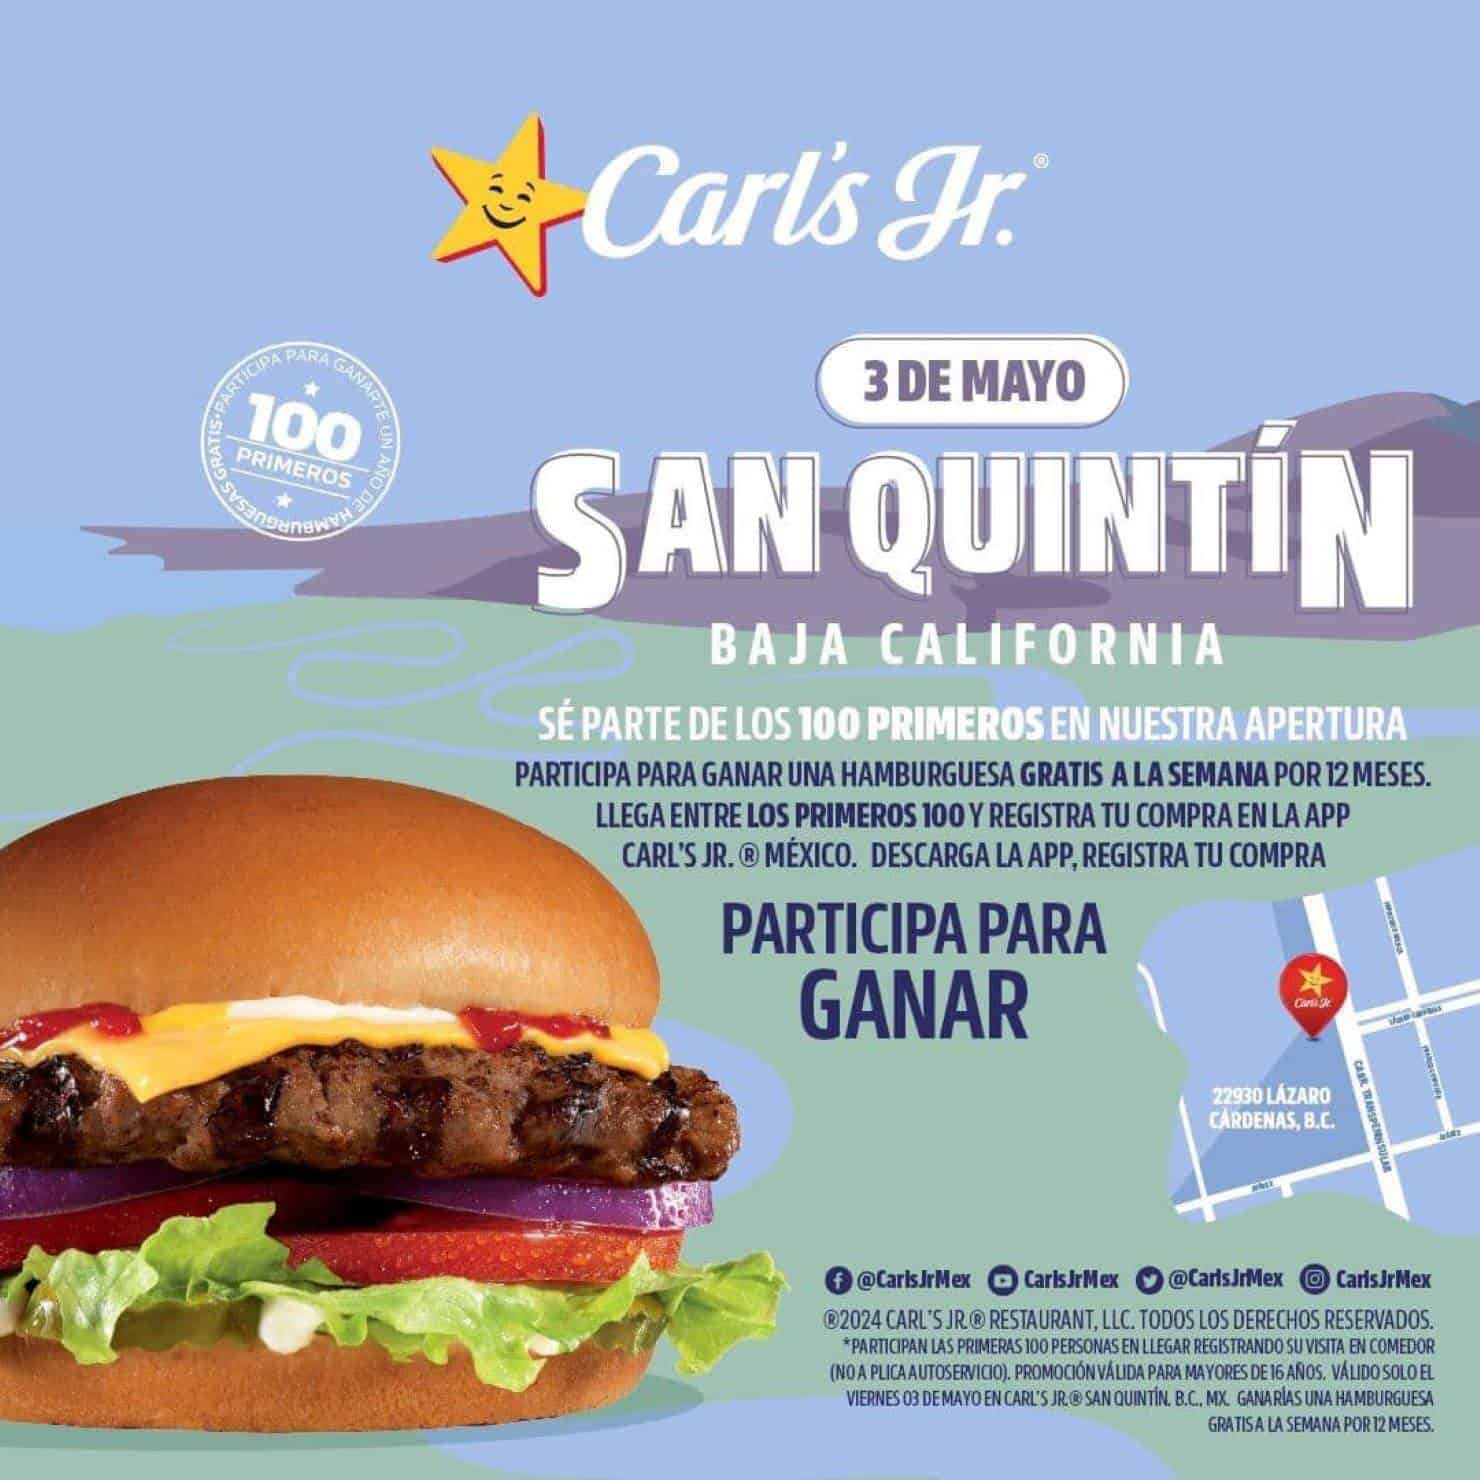 Carl’s Jr. en San Quintín